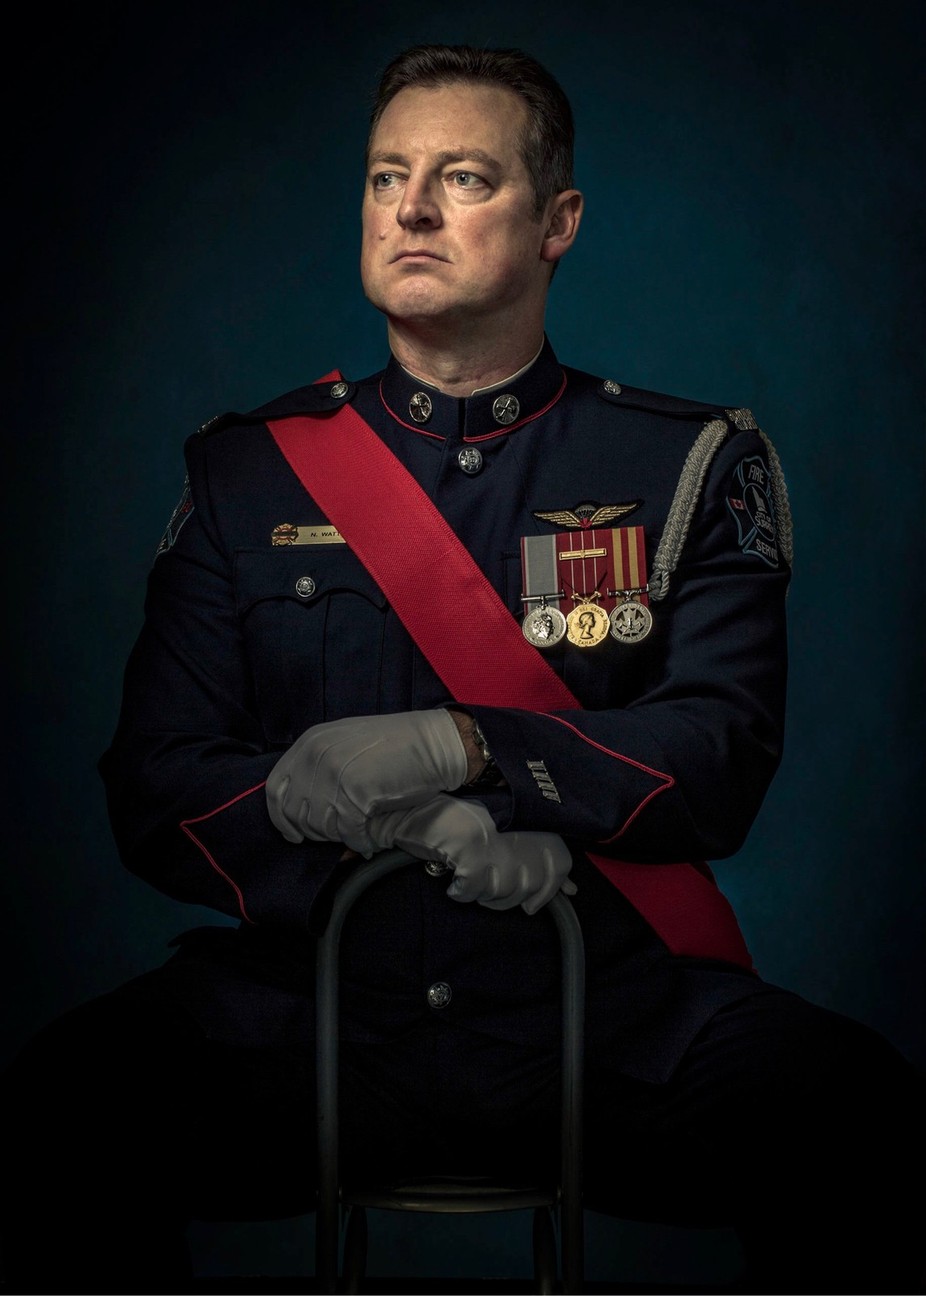 Major Nick Watts Royal Canadian Artillery  by rbubek - In Uniform Photo Contest